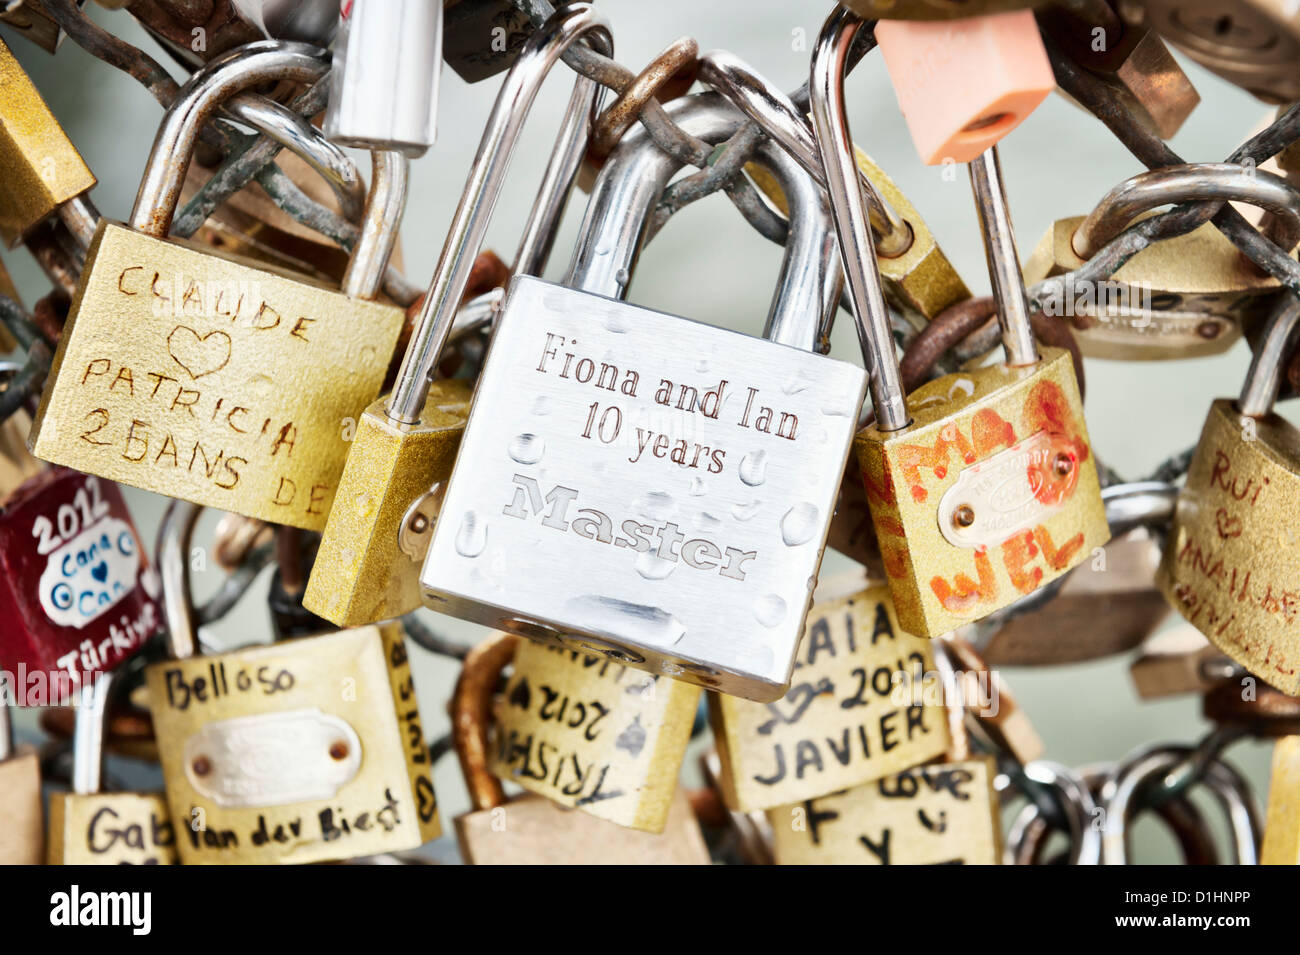 Pont des Arts love locks - Paris bridge Stock Photo